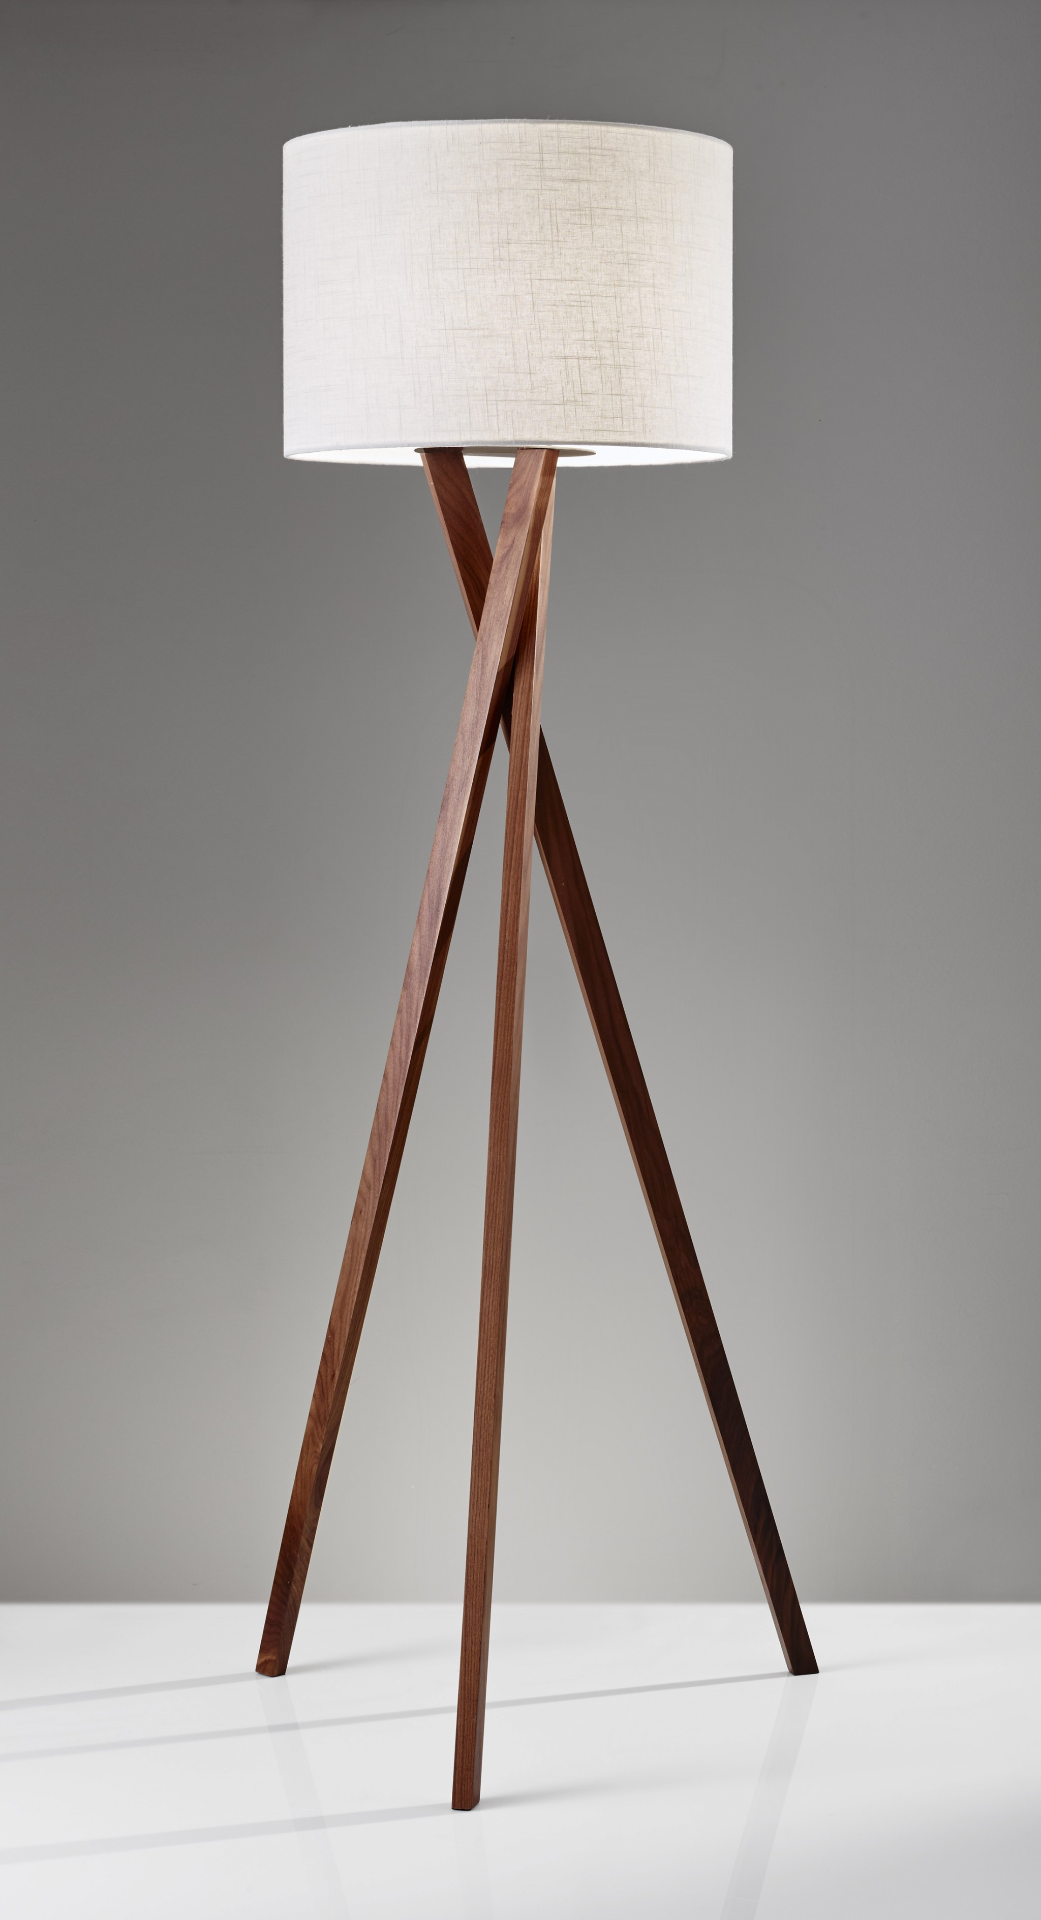 Brown - Modern & Industrial Designer Style Tripod Floor Lamp (63"H)